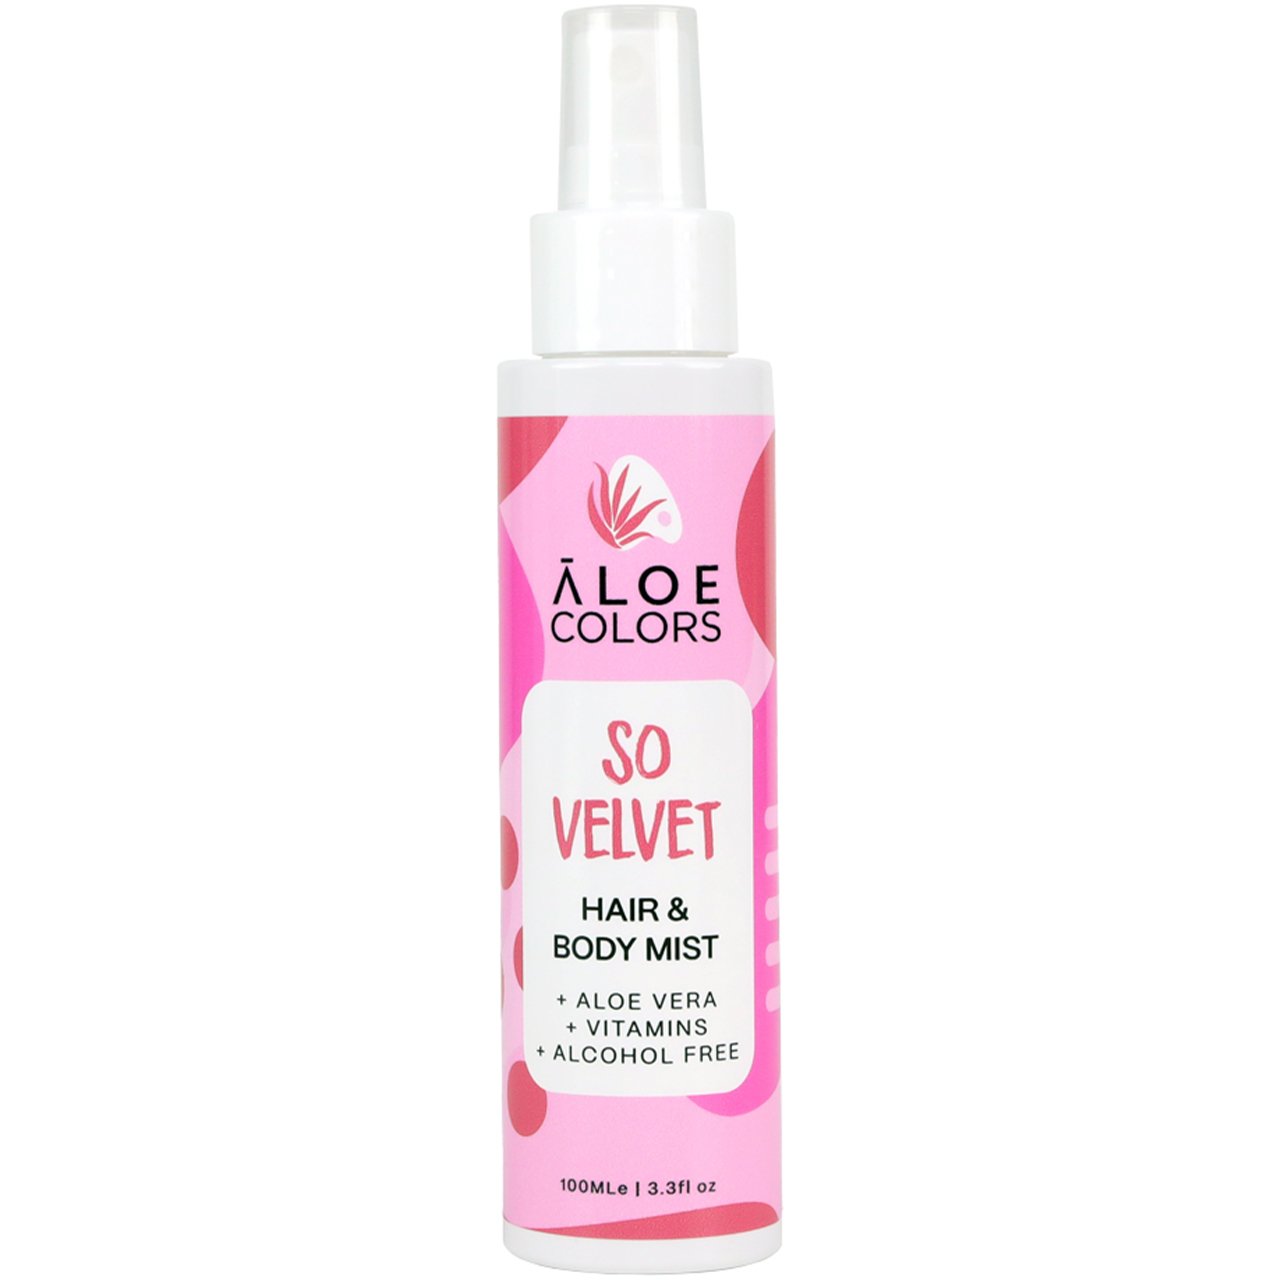 Aloe Colors So Velvet Hair & Body Mist Ενυδατικό Mist Μαλλιών & Σώματος για Προστασία & Θρέψη 100ml 53047